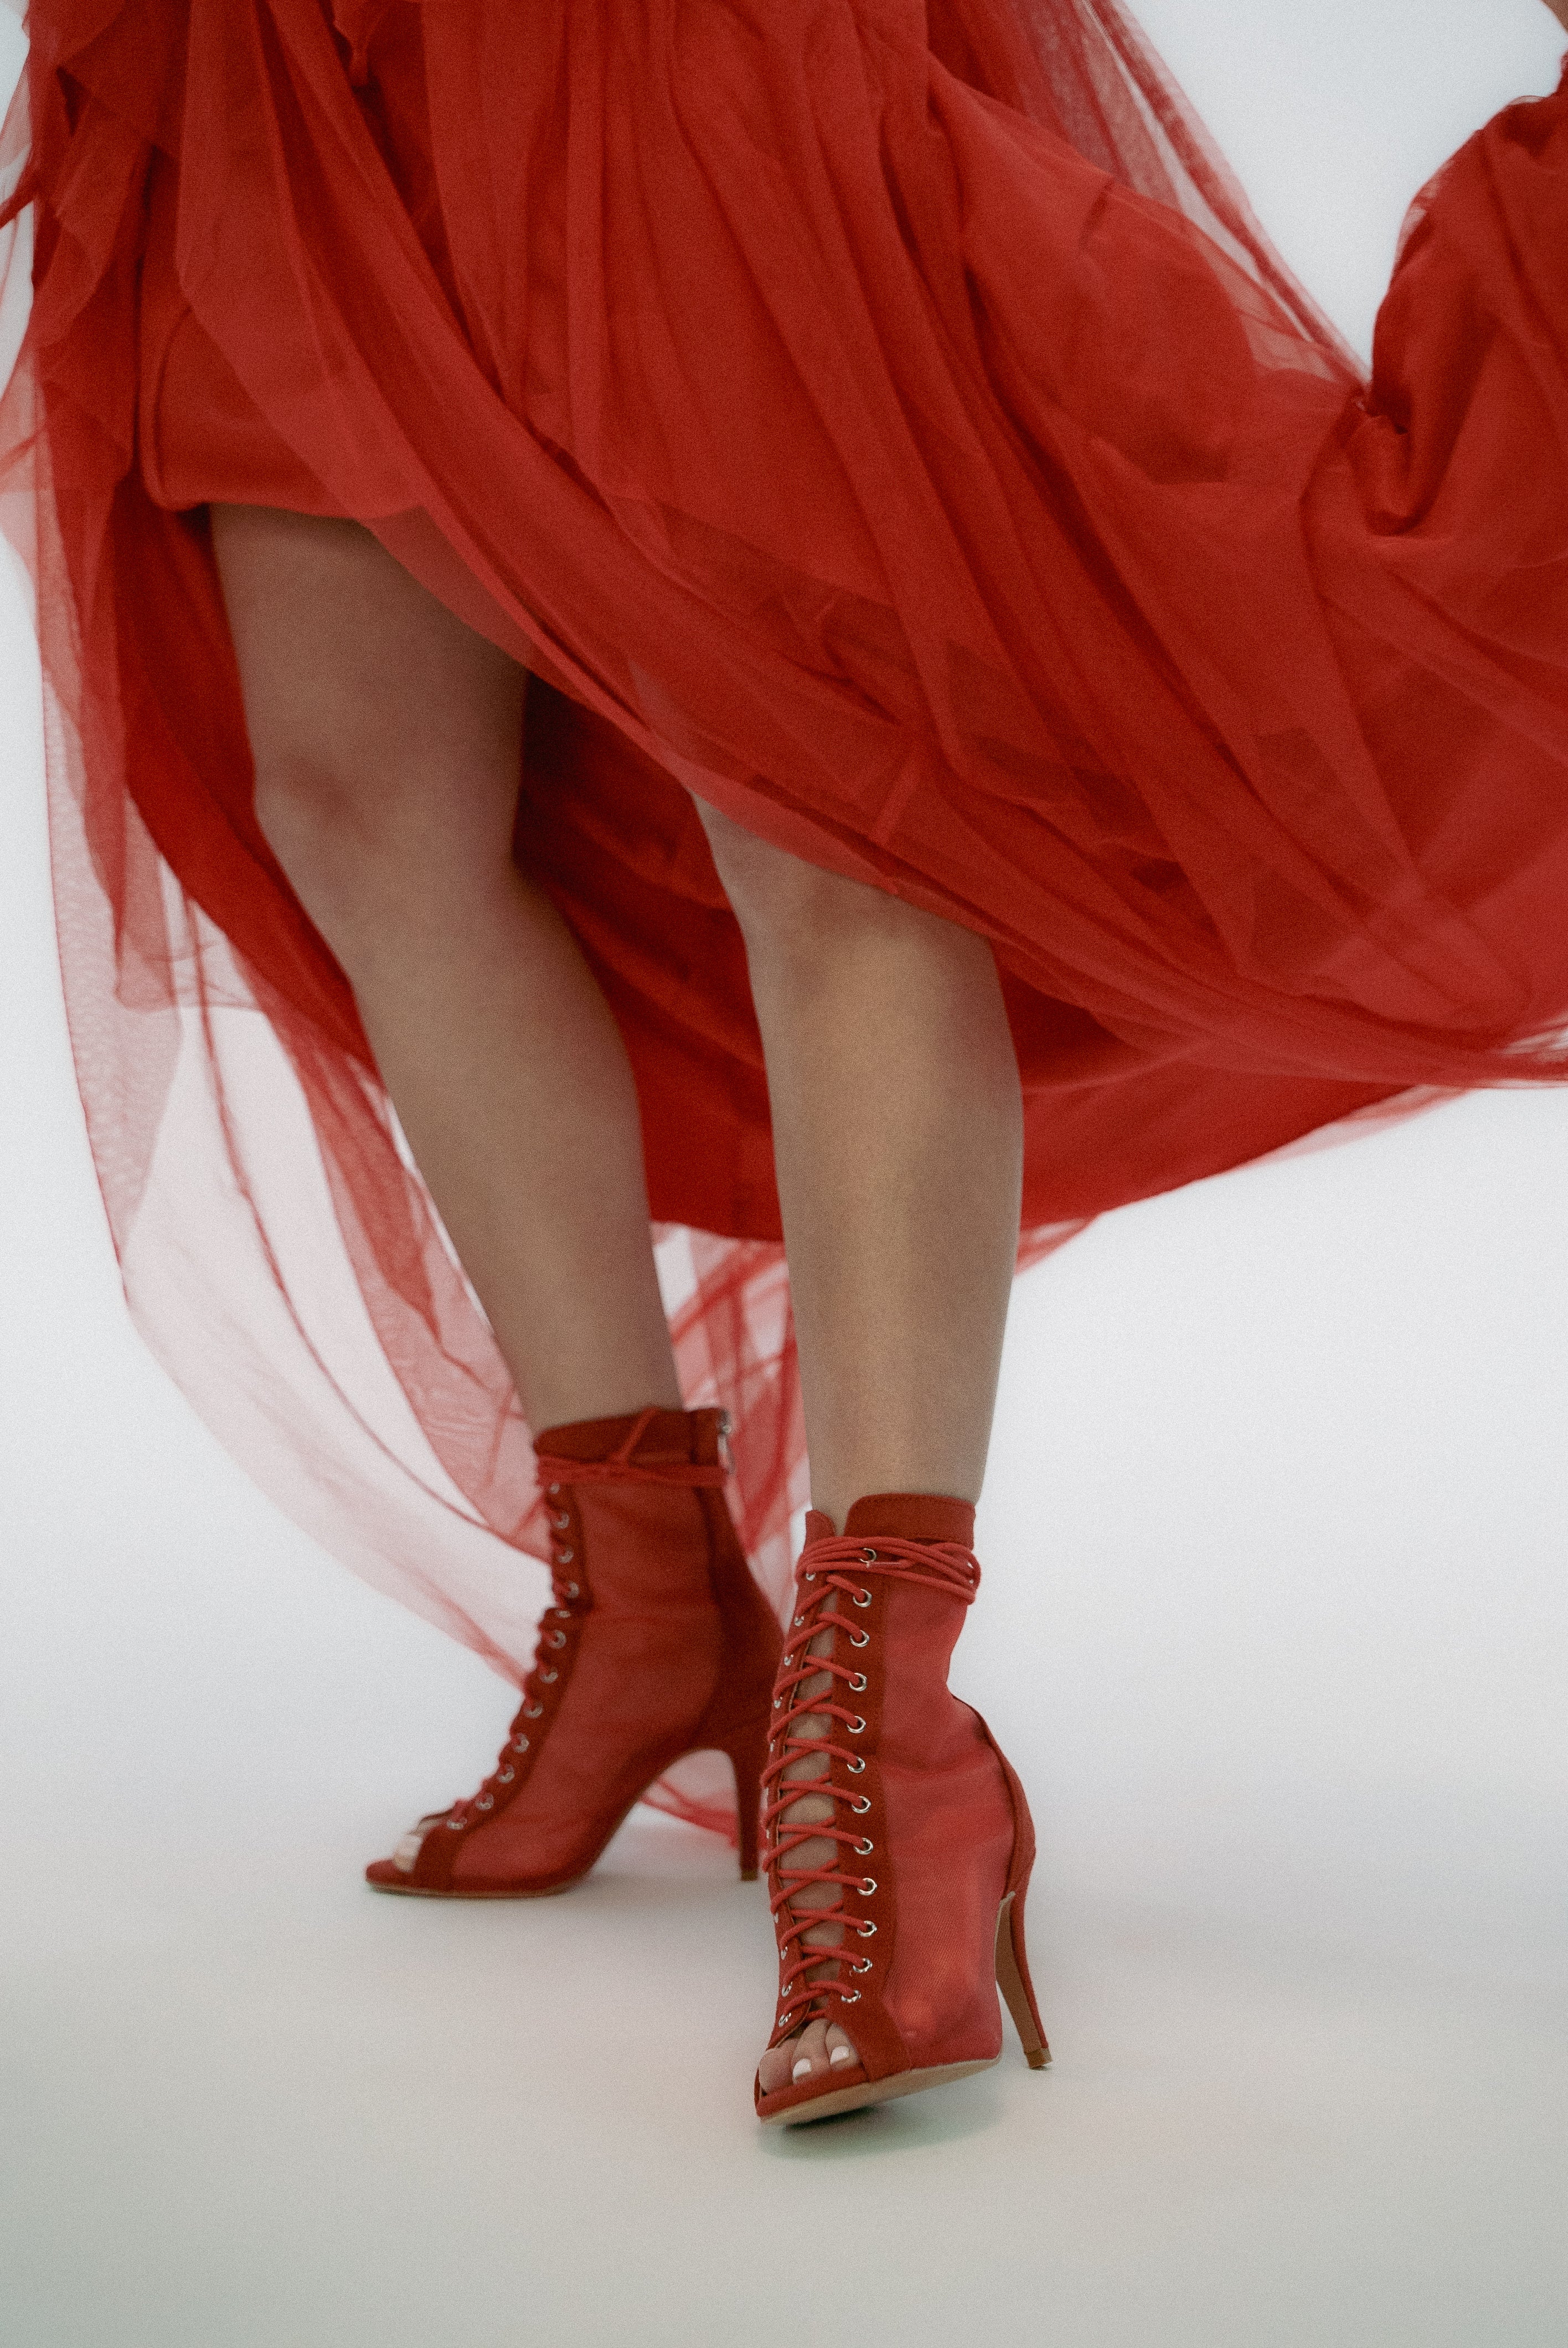 Red Boots by Sara Panero